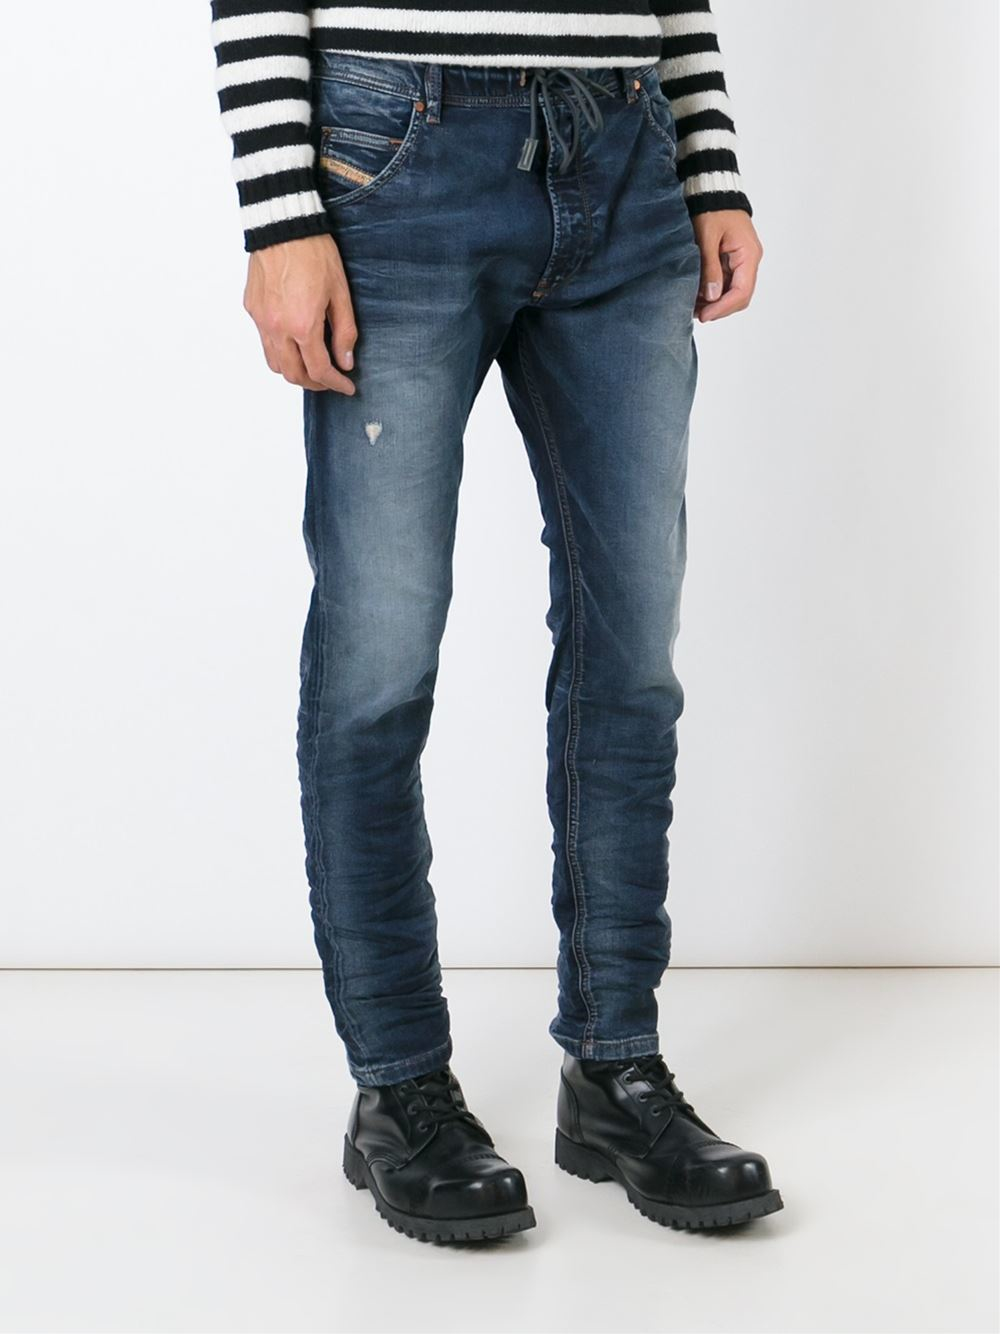 Lyst - Diesel 'krooley' Drawstring Jeans in Blue for Men